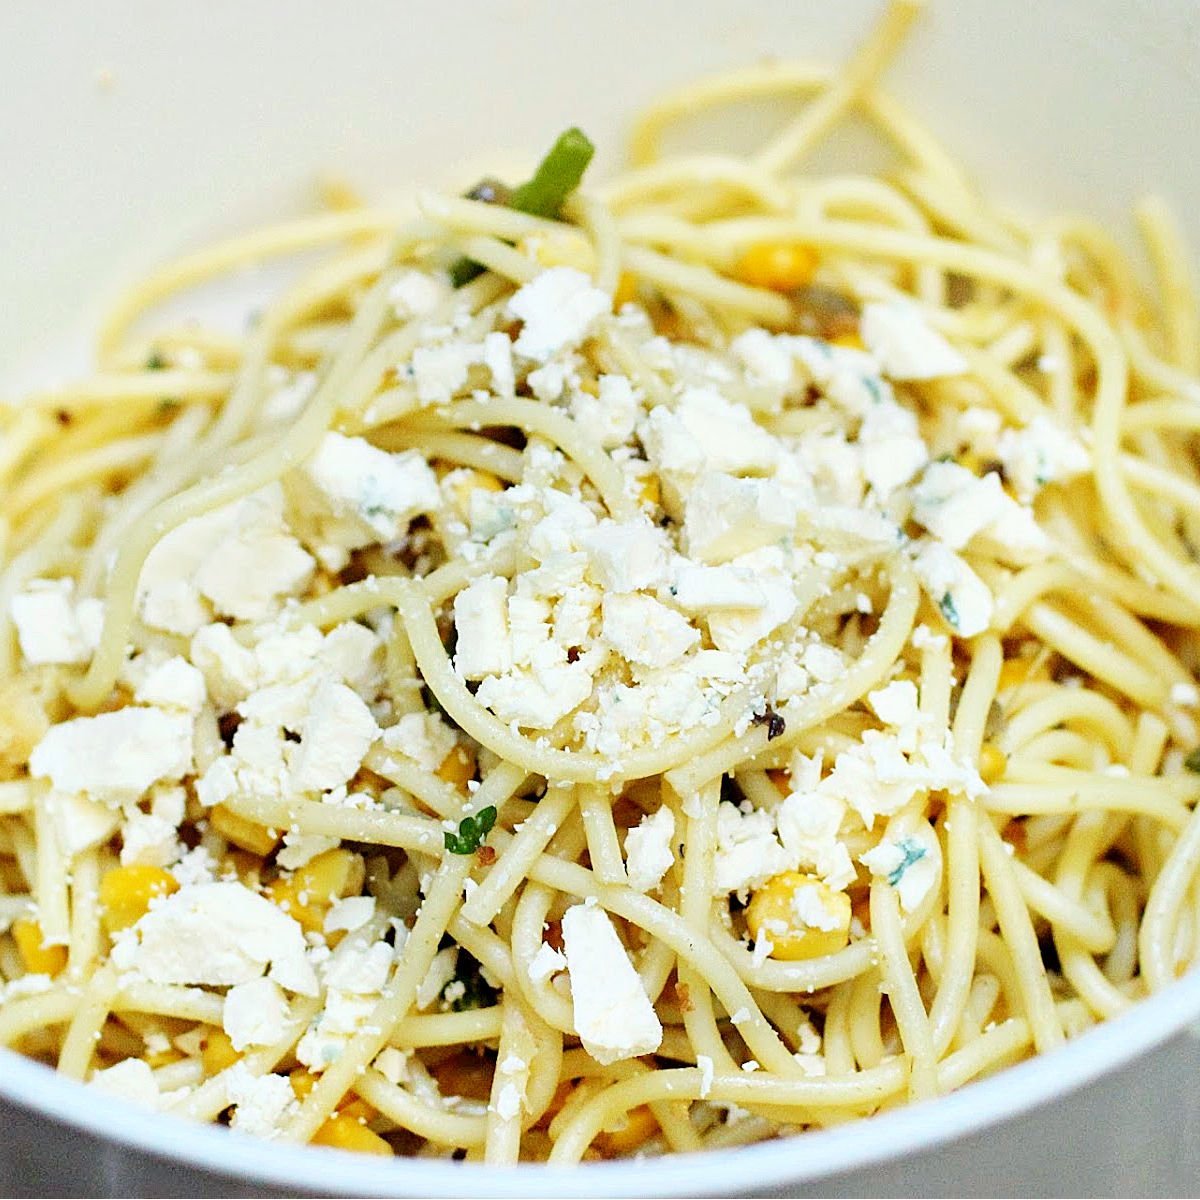 Feta cheese added to spaghetti in a white bowl.